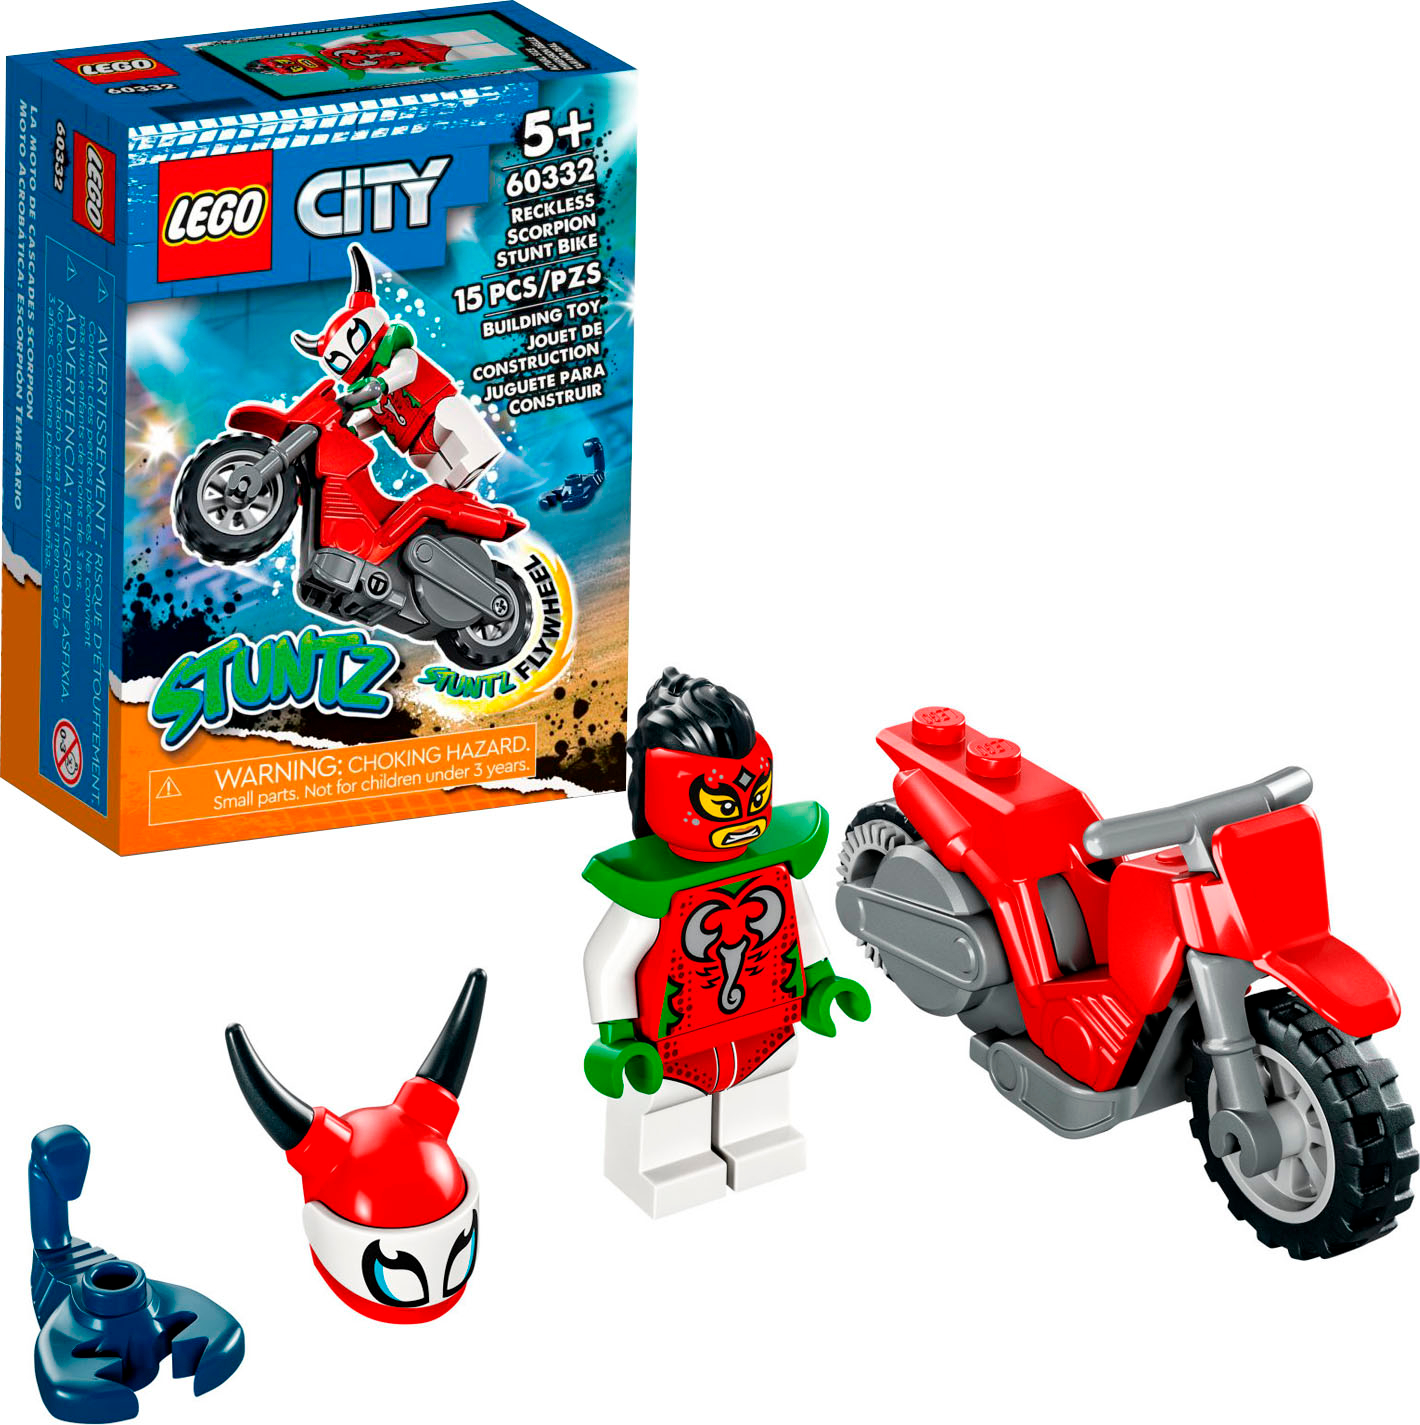 LEGO City Reckless Scorpion Stunt Bike 60332 6379640